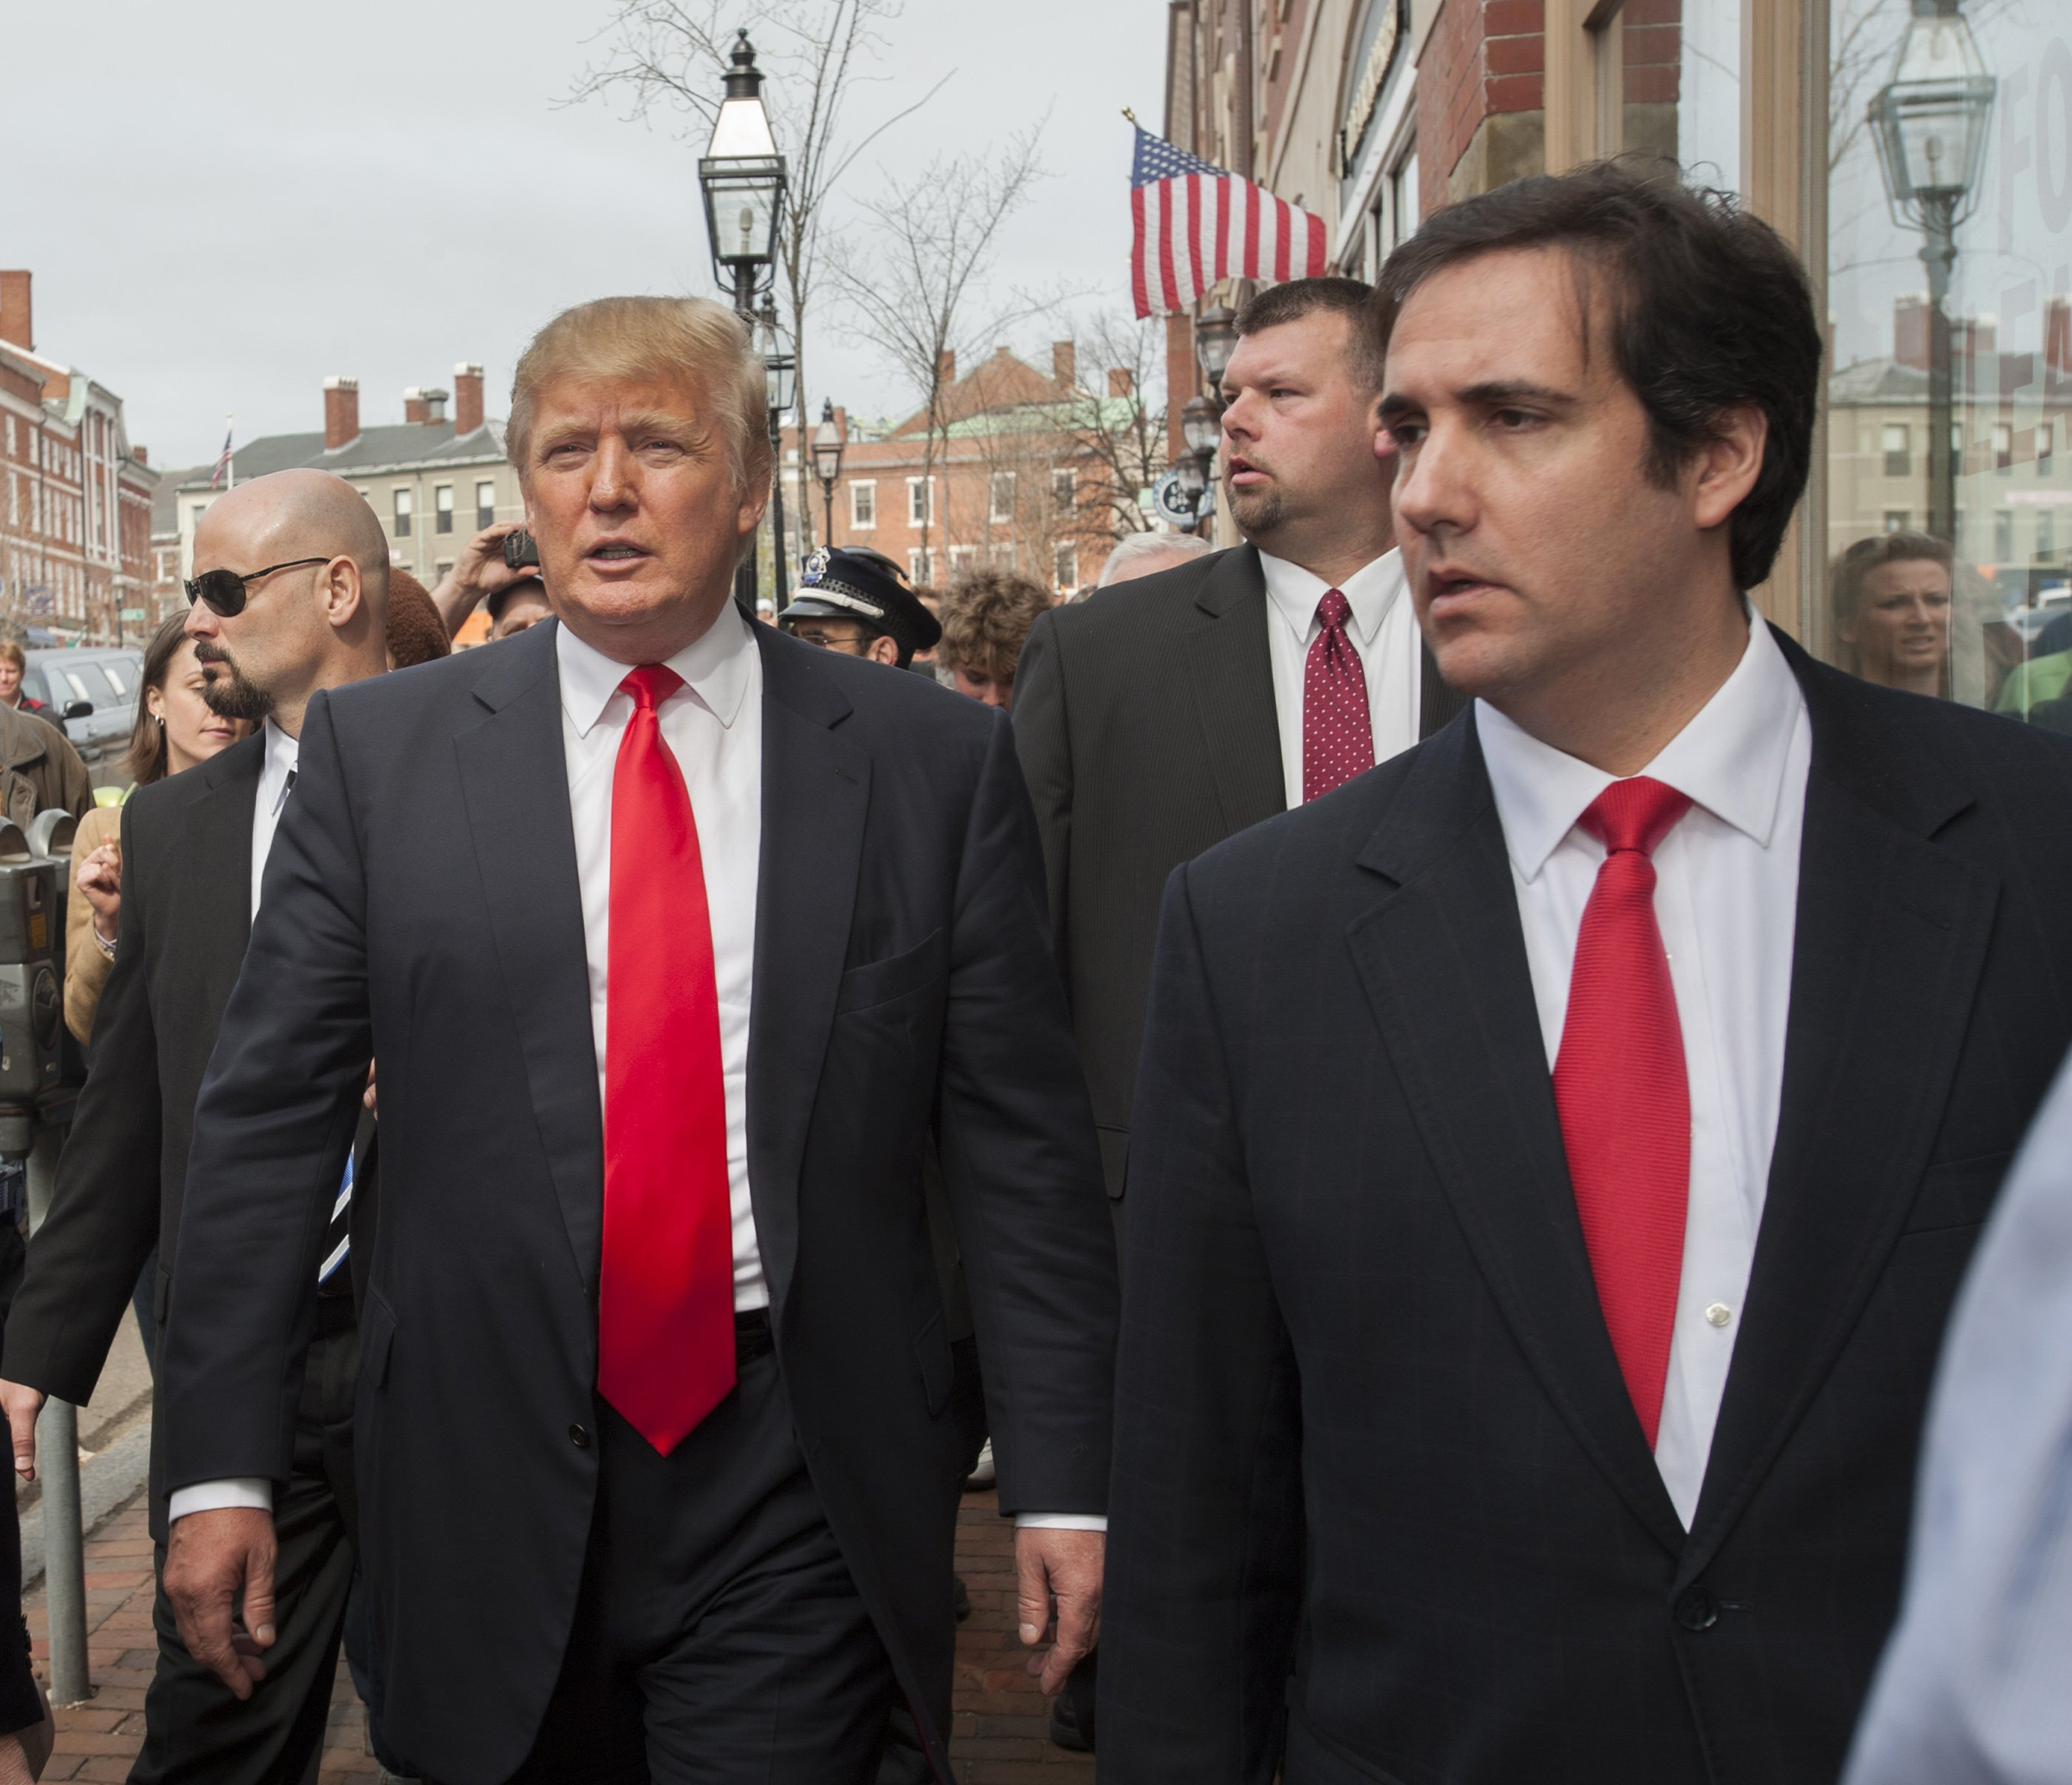 Trump and Cohen visit Portsmouth, N.H., in April 2011 (Rick Friedman—Polaris)